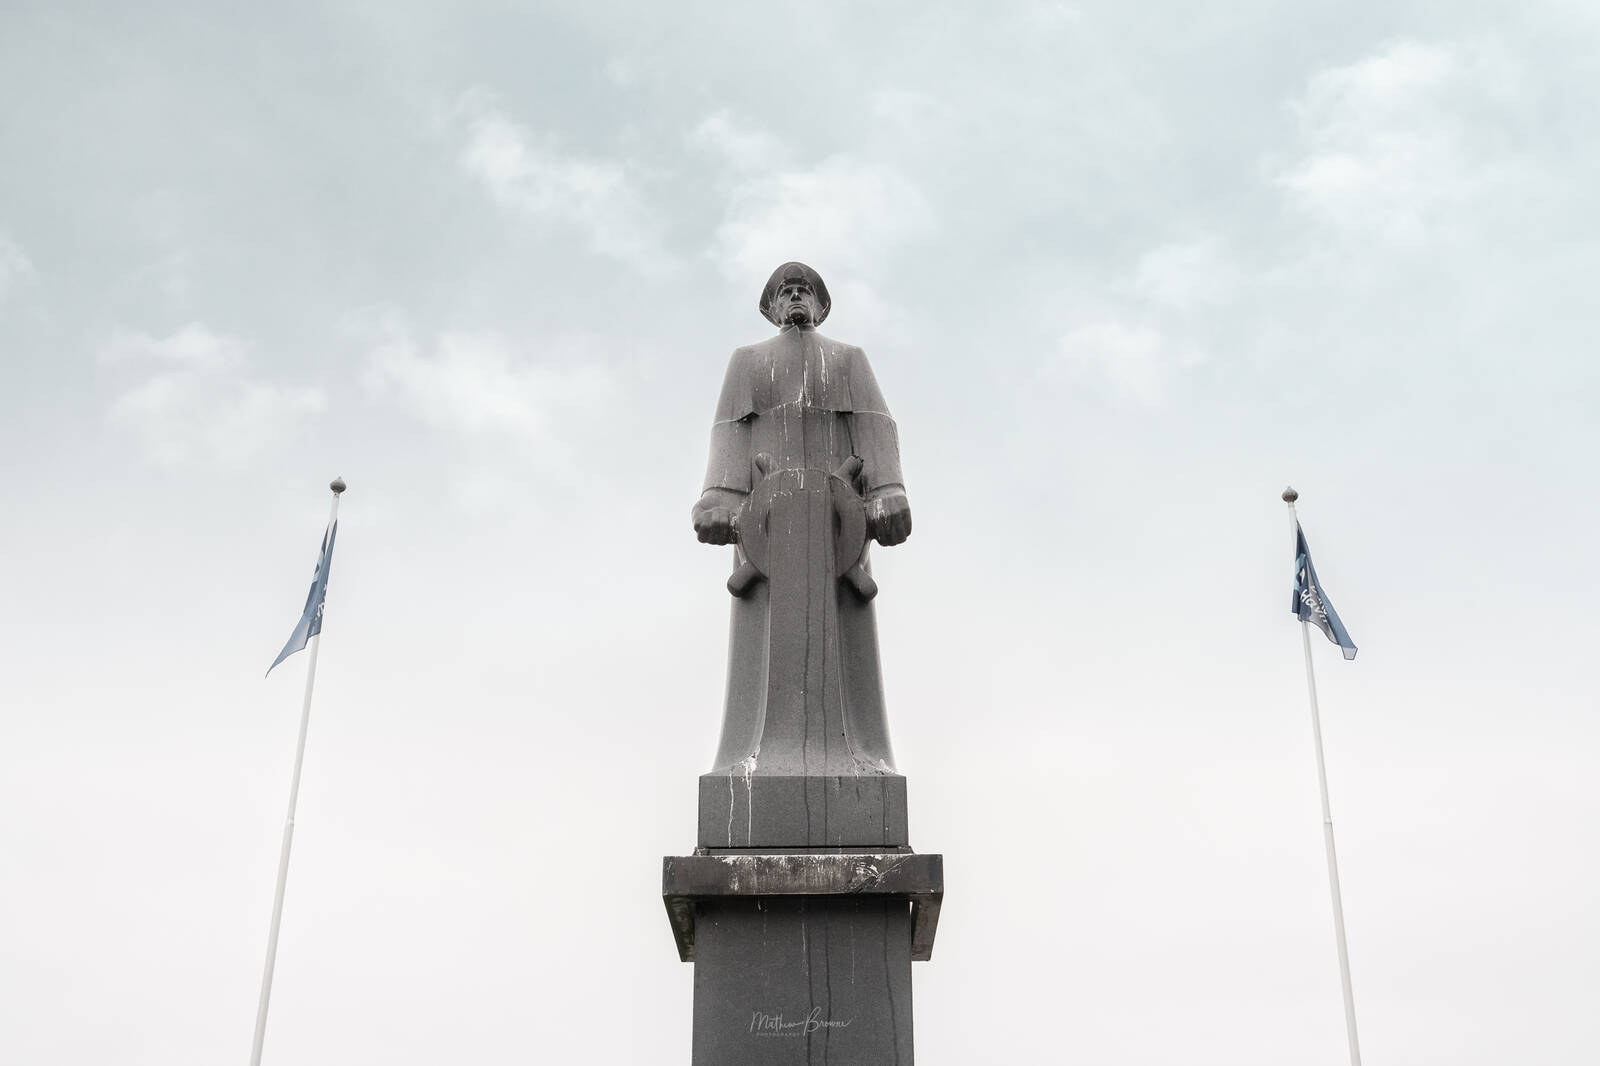 Image of Shetlands-Larsen Monument by Mathew Browne